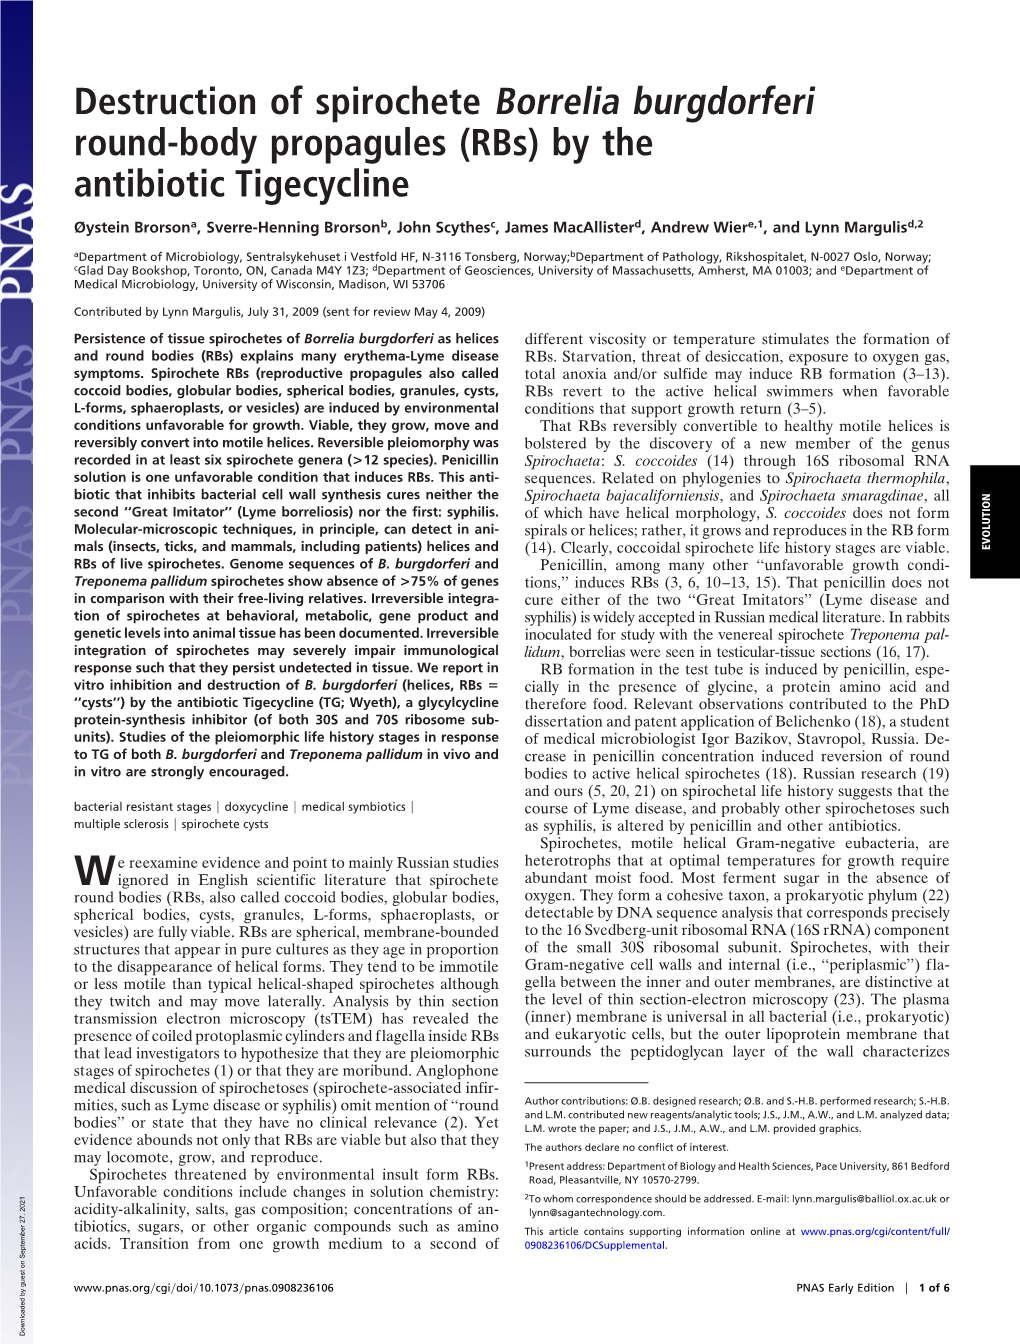 Destruction of Spirochete Borrelia Burgdorferi Round-Body Propagules (Rbs) by the Antibiotic Tigecycline